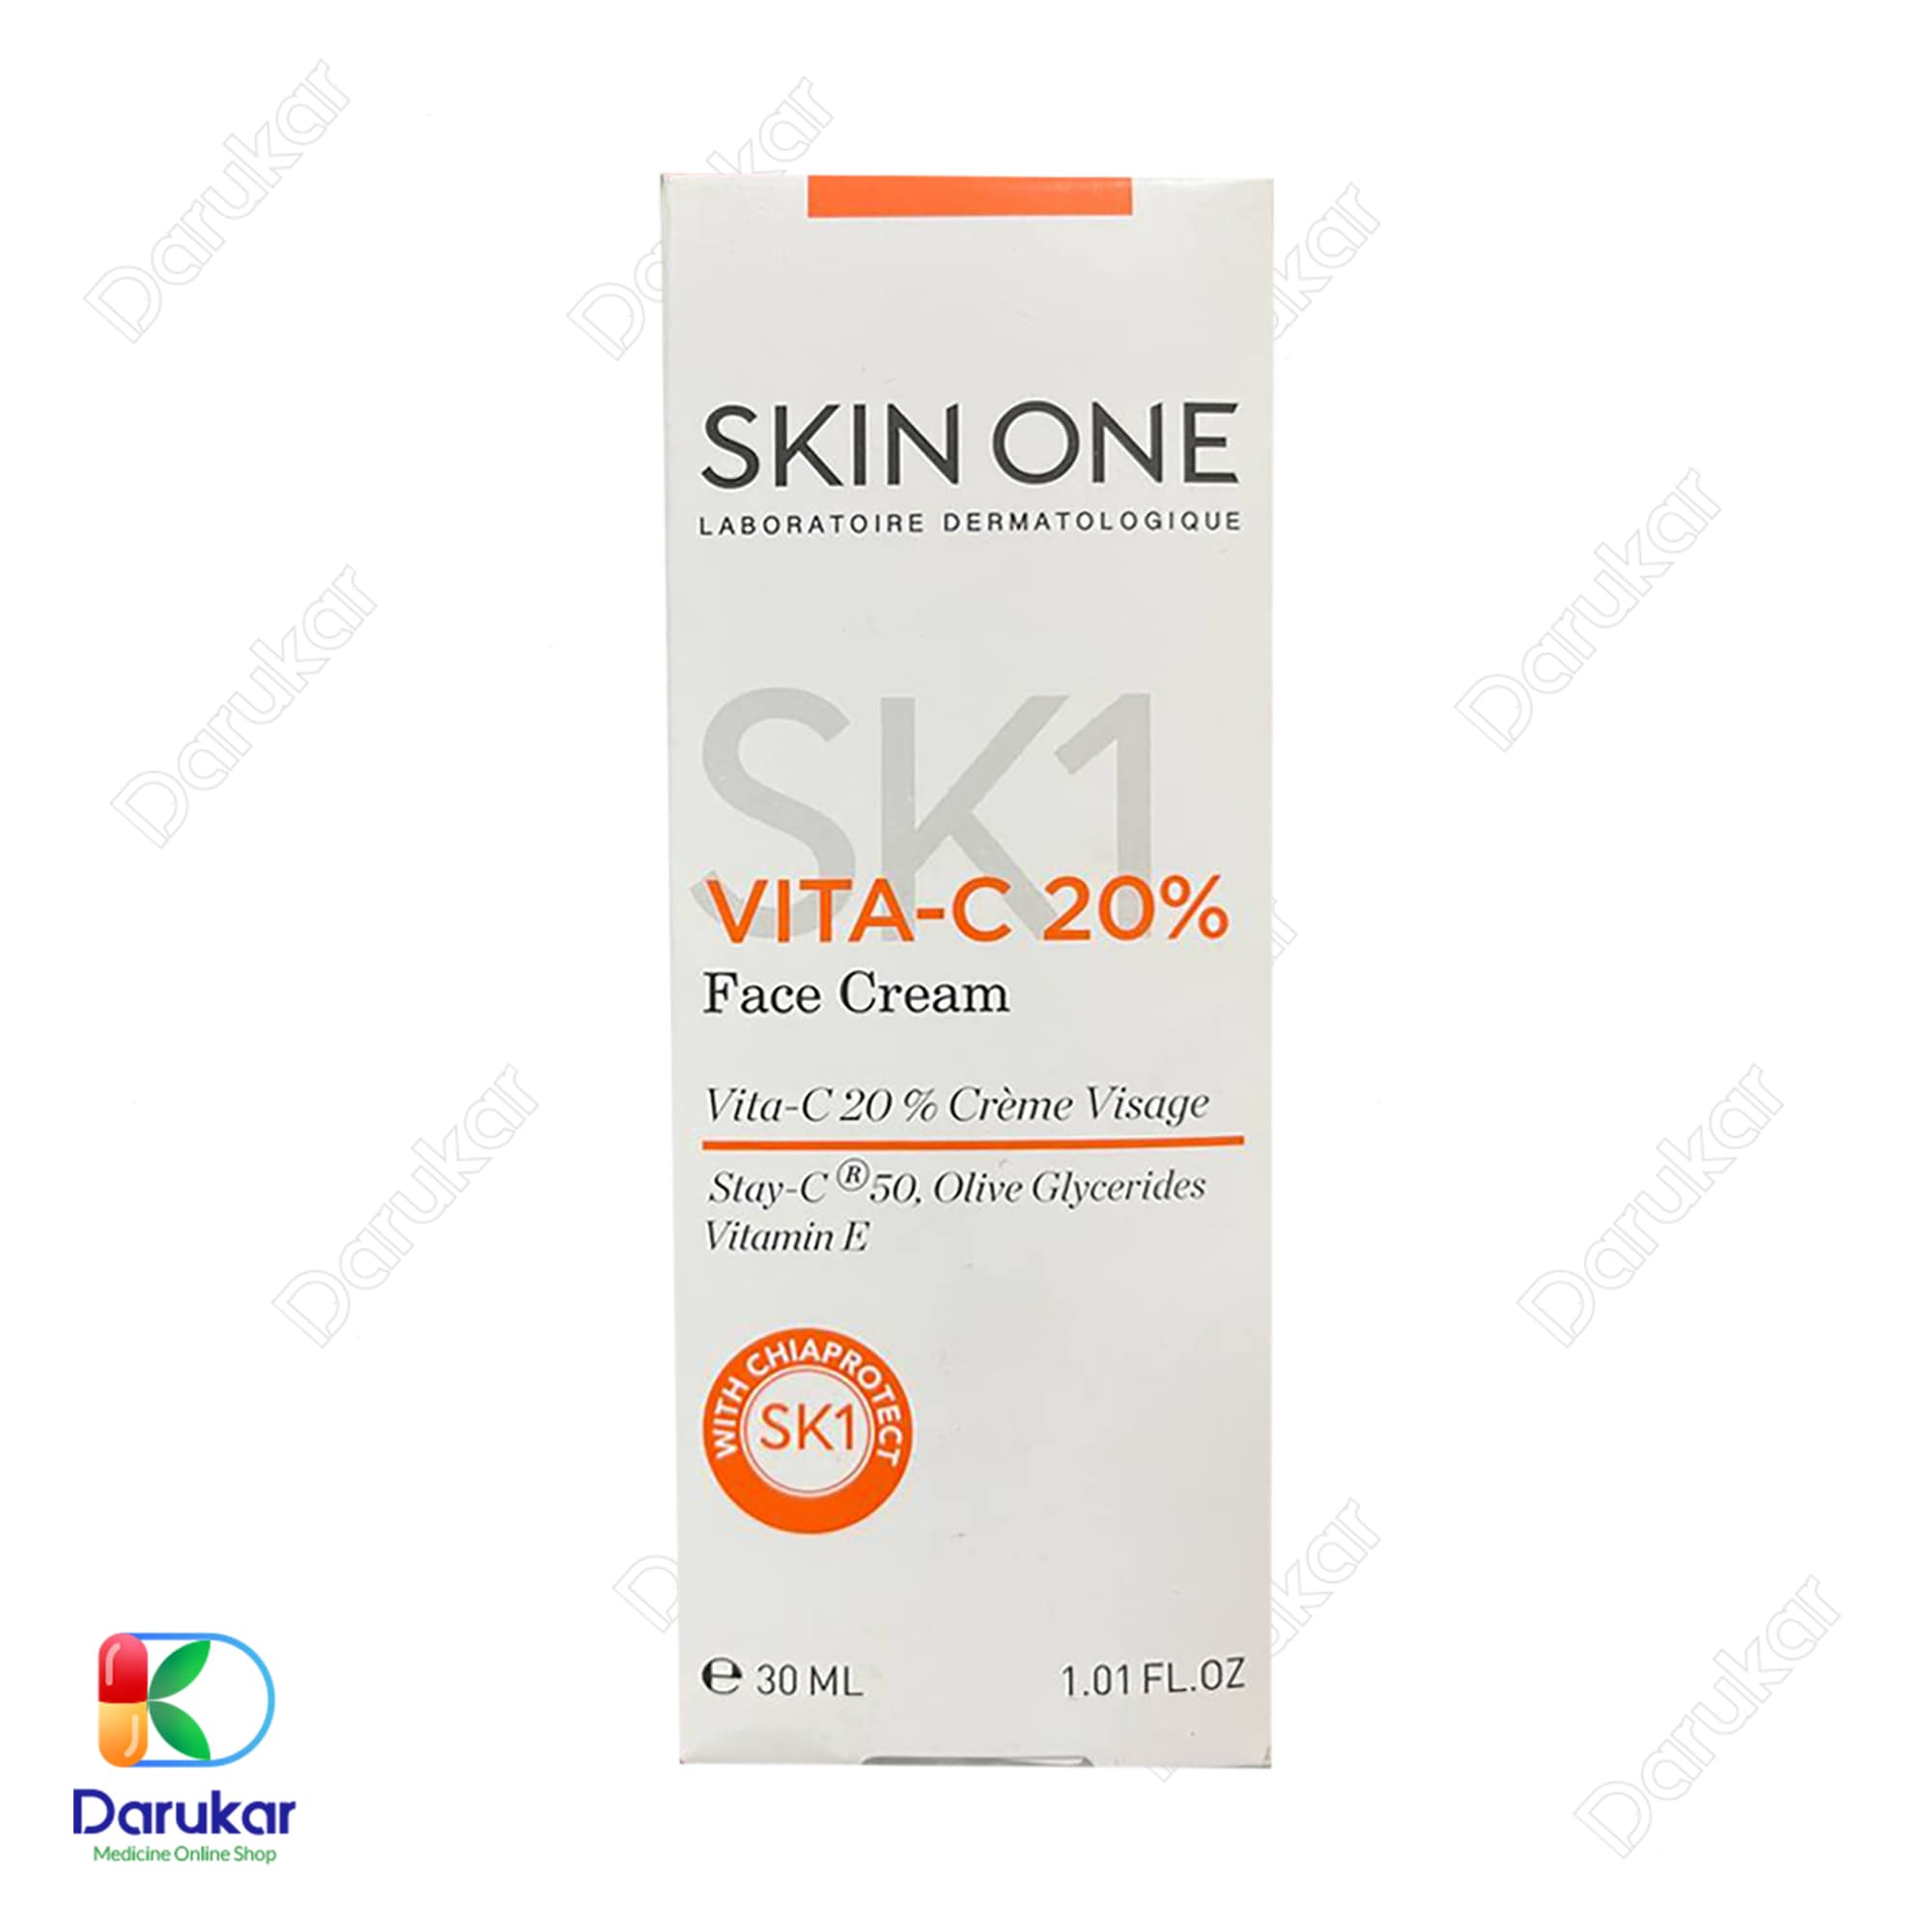 Skin One Vita C 20 Face Cream 30 ml 2